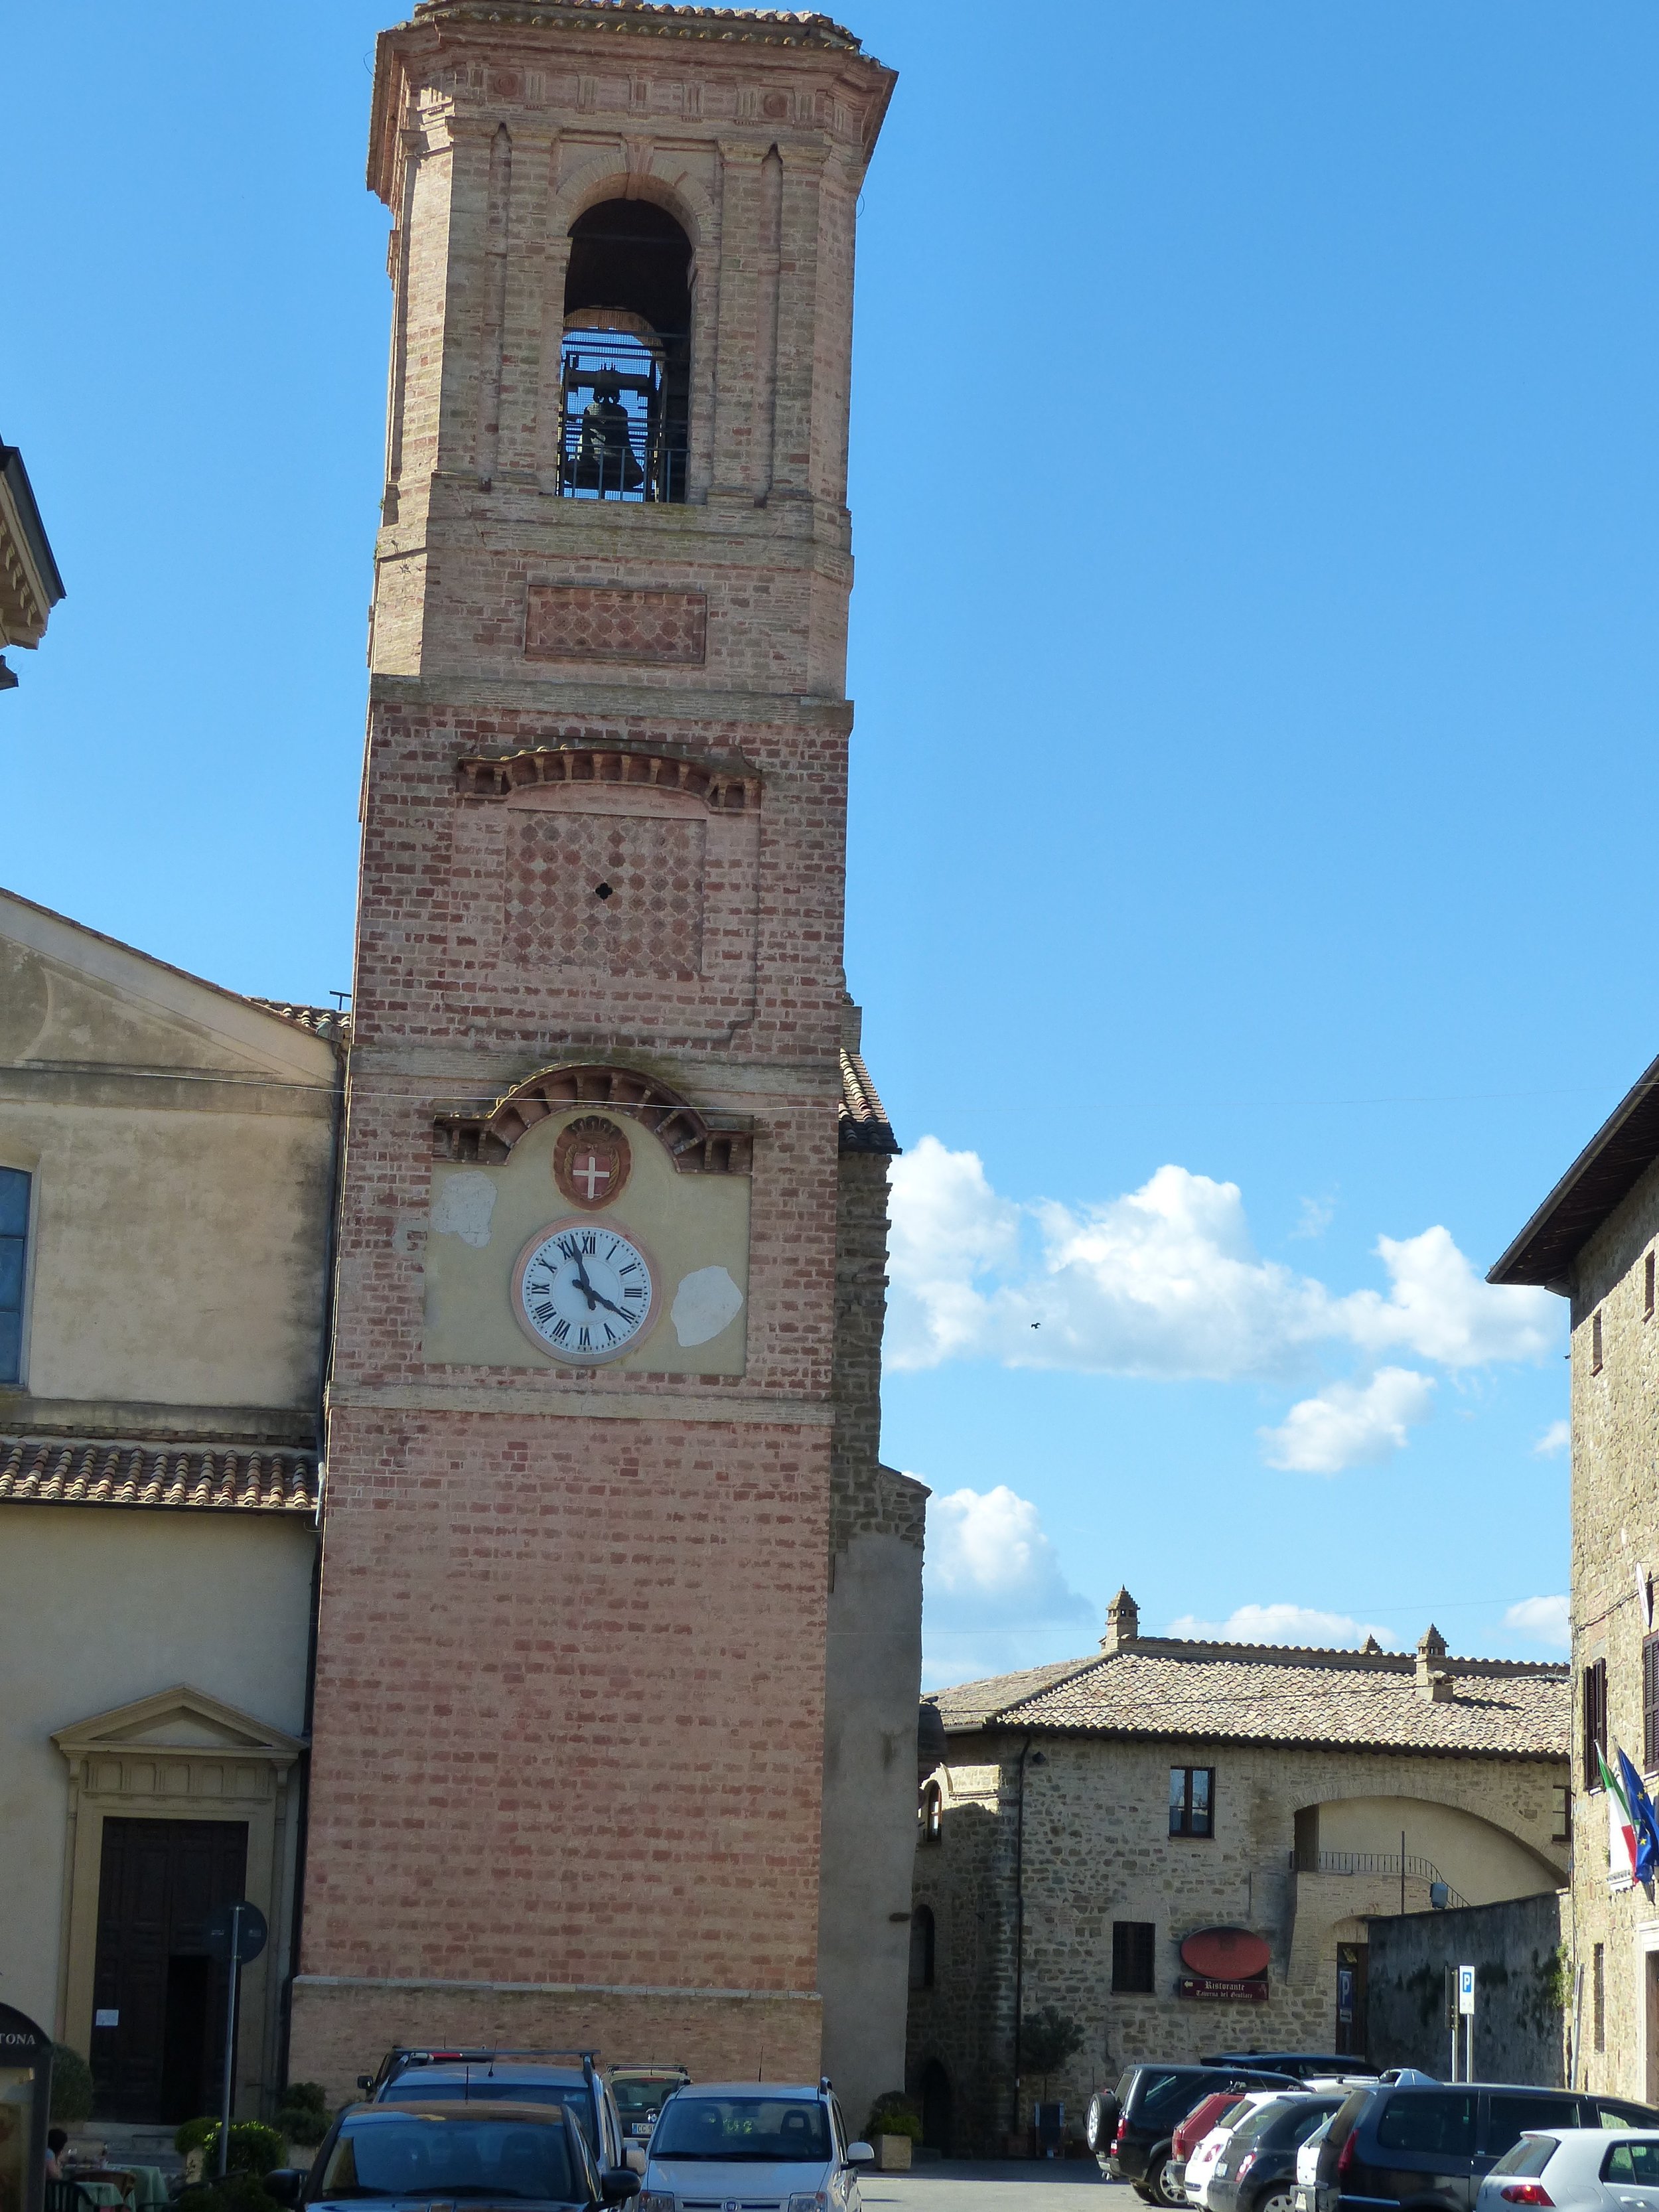 umbrian destinations, where to go in umbria Italy